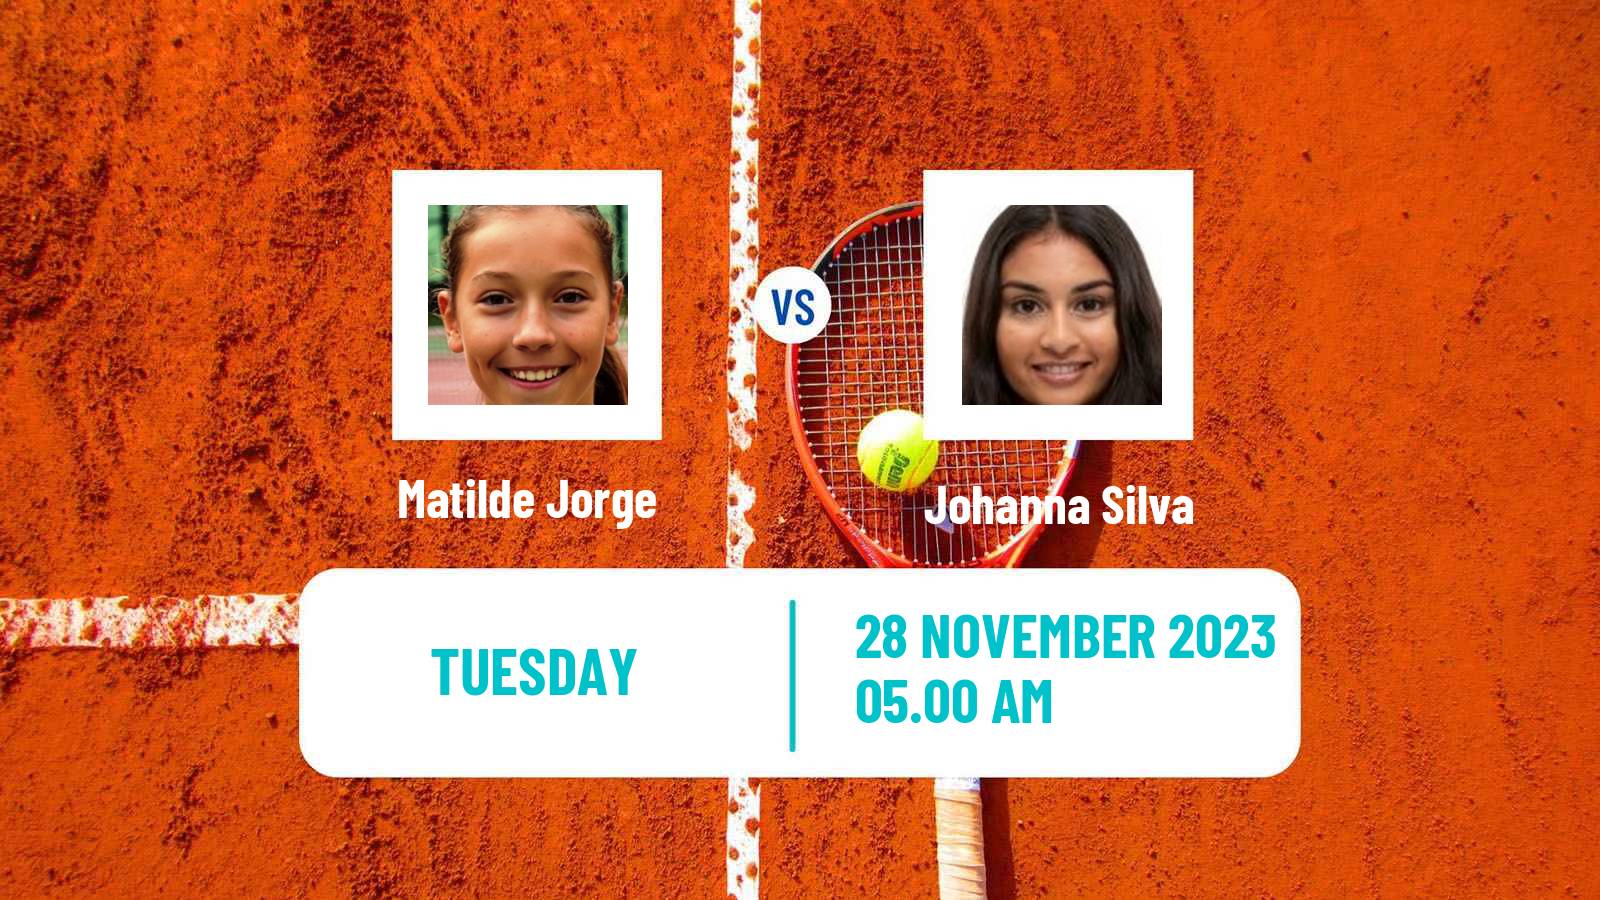 Tennis ITF W25 Lousada 2 Women Matilde Jorge - Johanna Silva